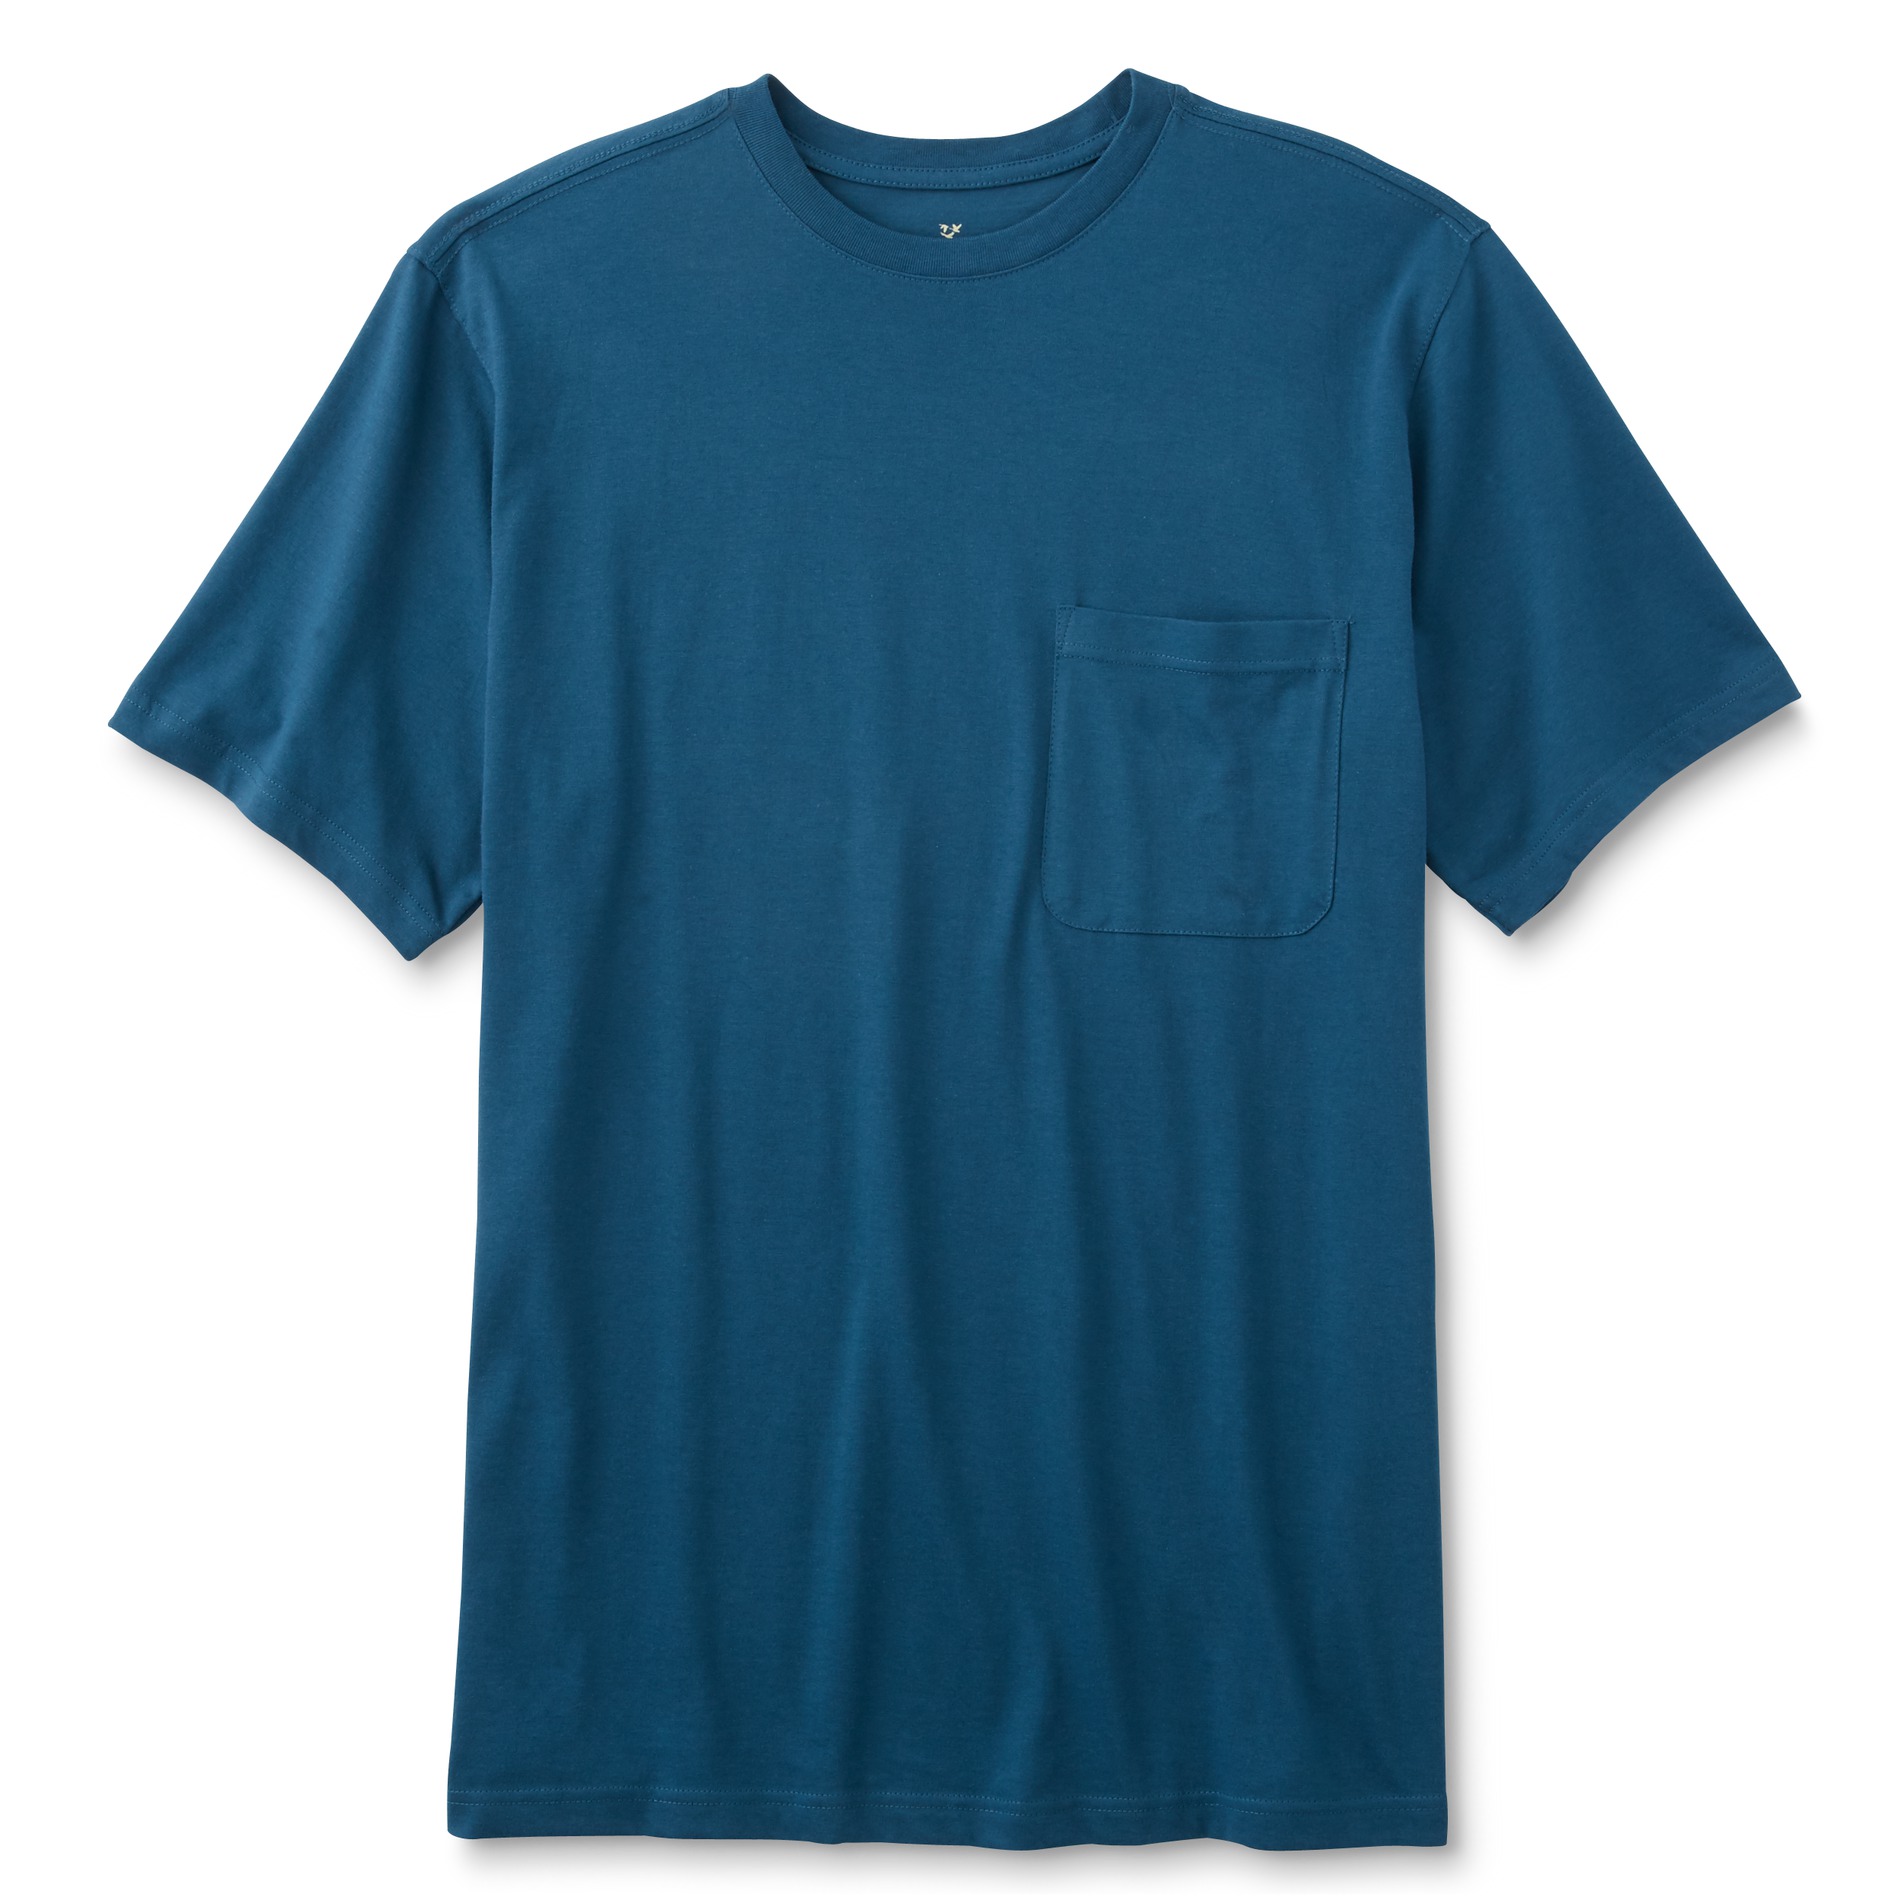 Outdoor Life Men's Big & Tall Pocket T-Shirt